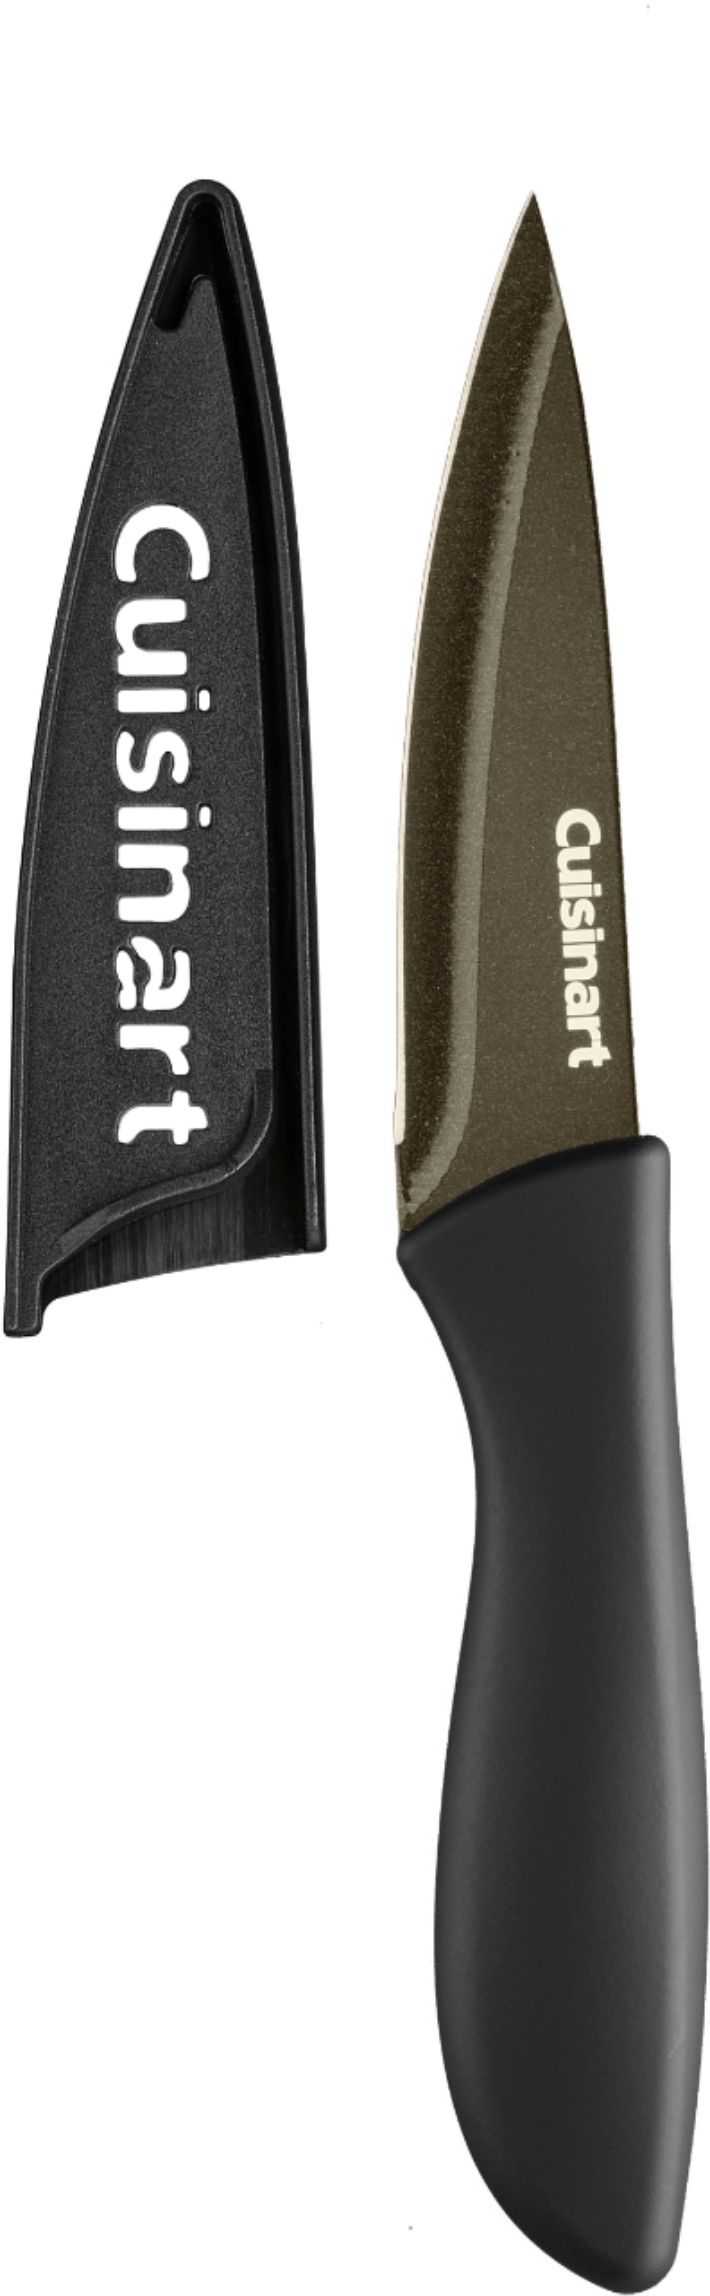 Cuisinart 12-Piece Metallic Knife Set with Blade Guards - Black - 9476834